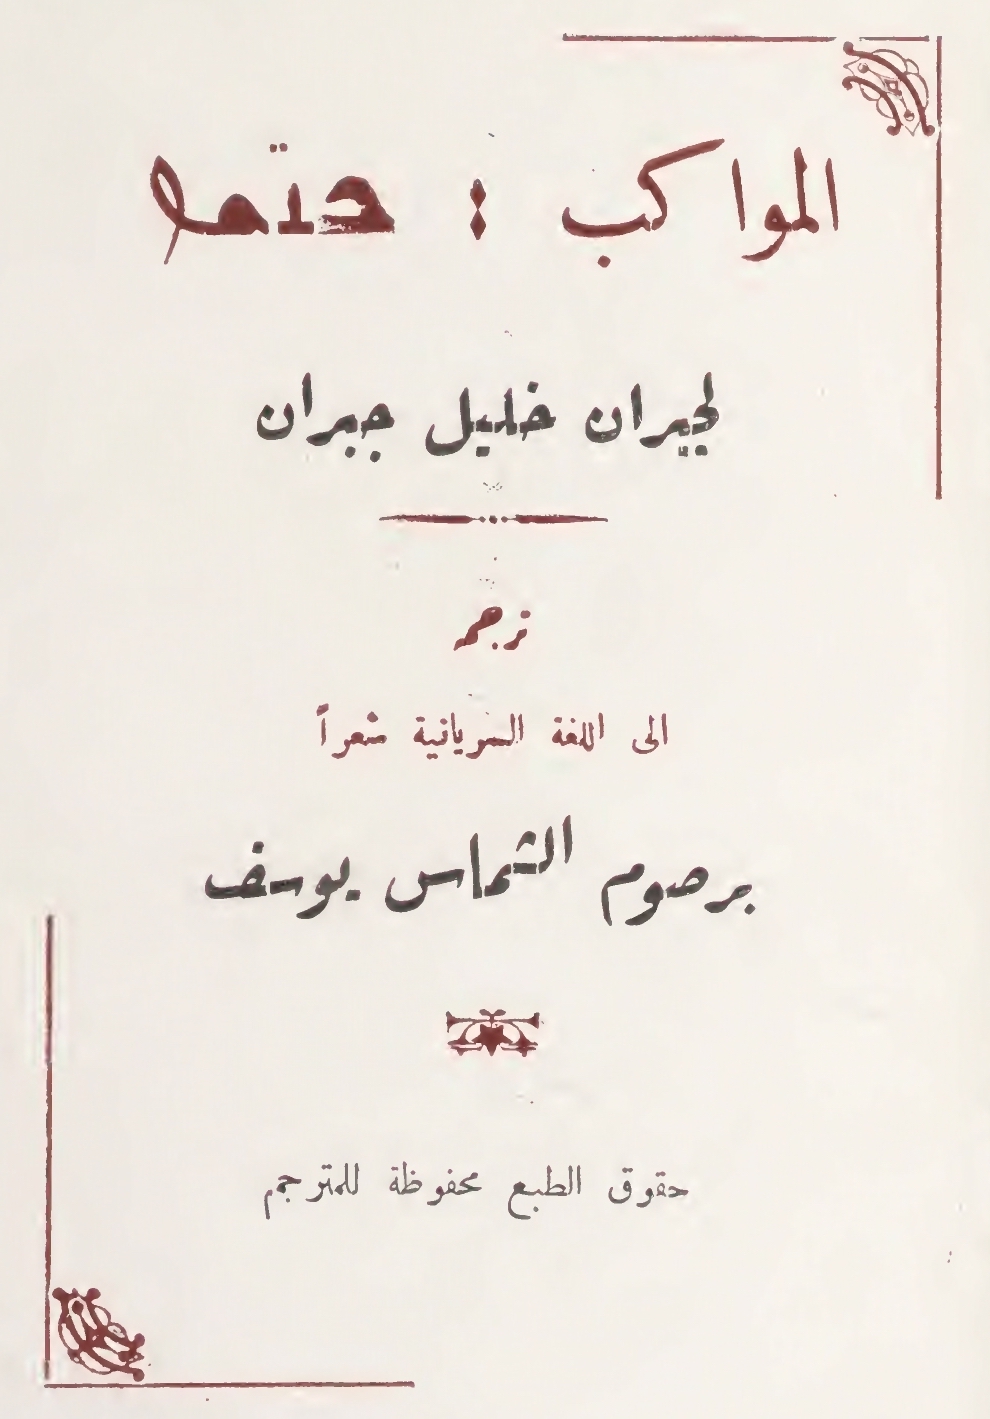 K. Gibran, The Processions (Translation into Syriac), Beth Mardutho: The Syriac Institute, 1957.